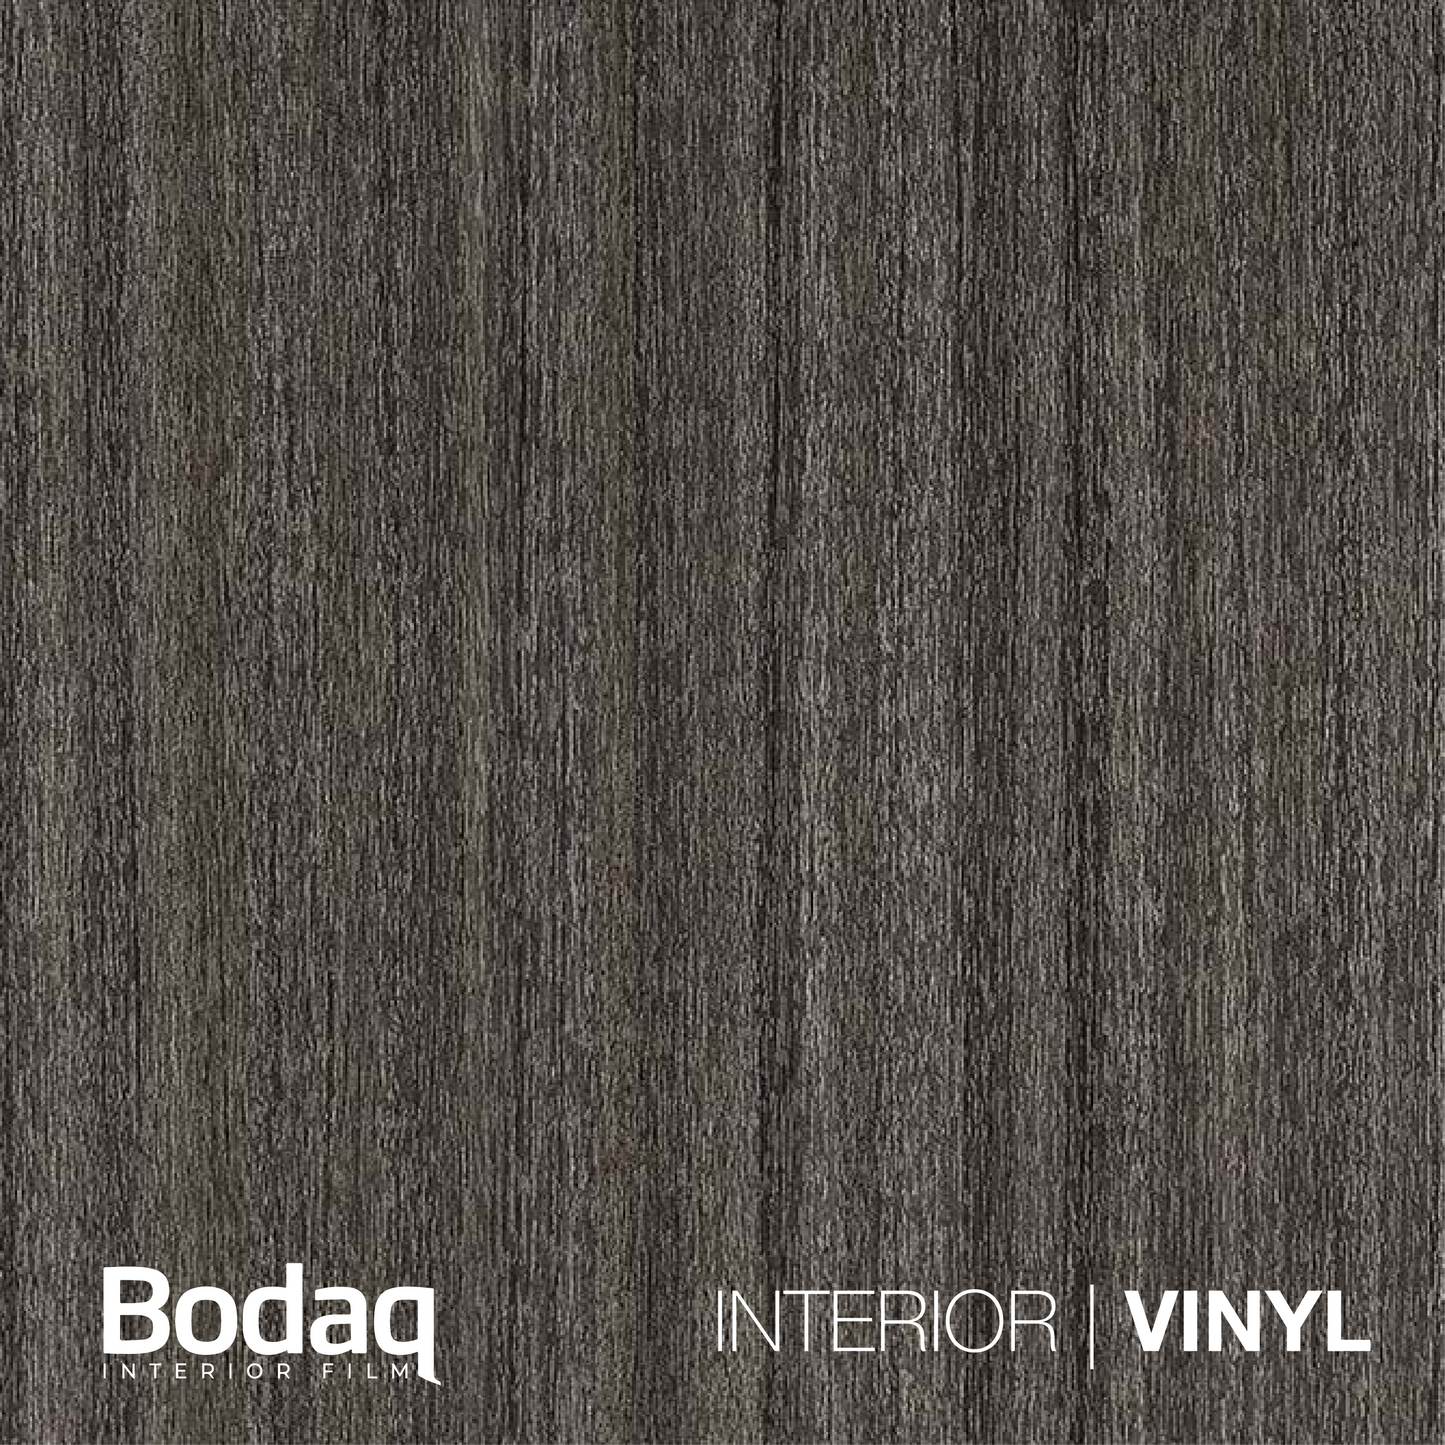 BODAQ Interior Film XP103 Premium Wood - A5 Sample